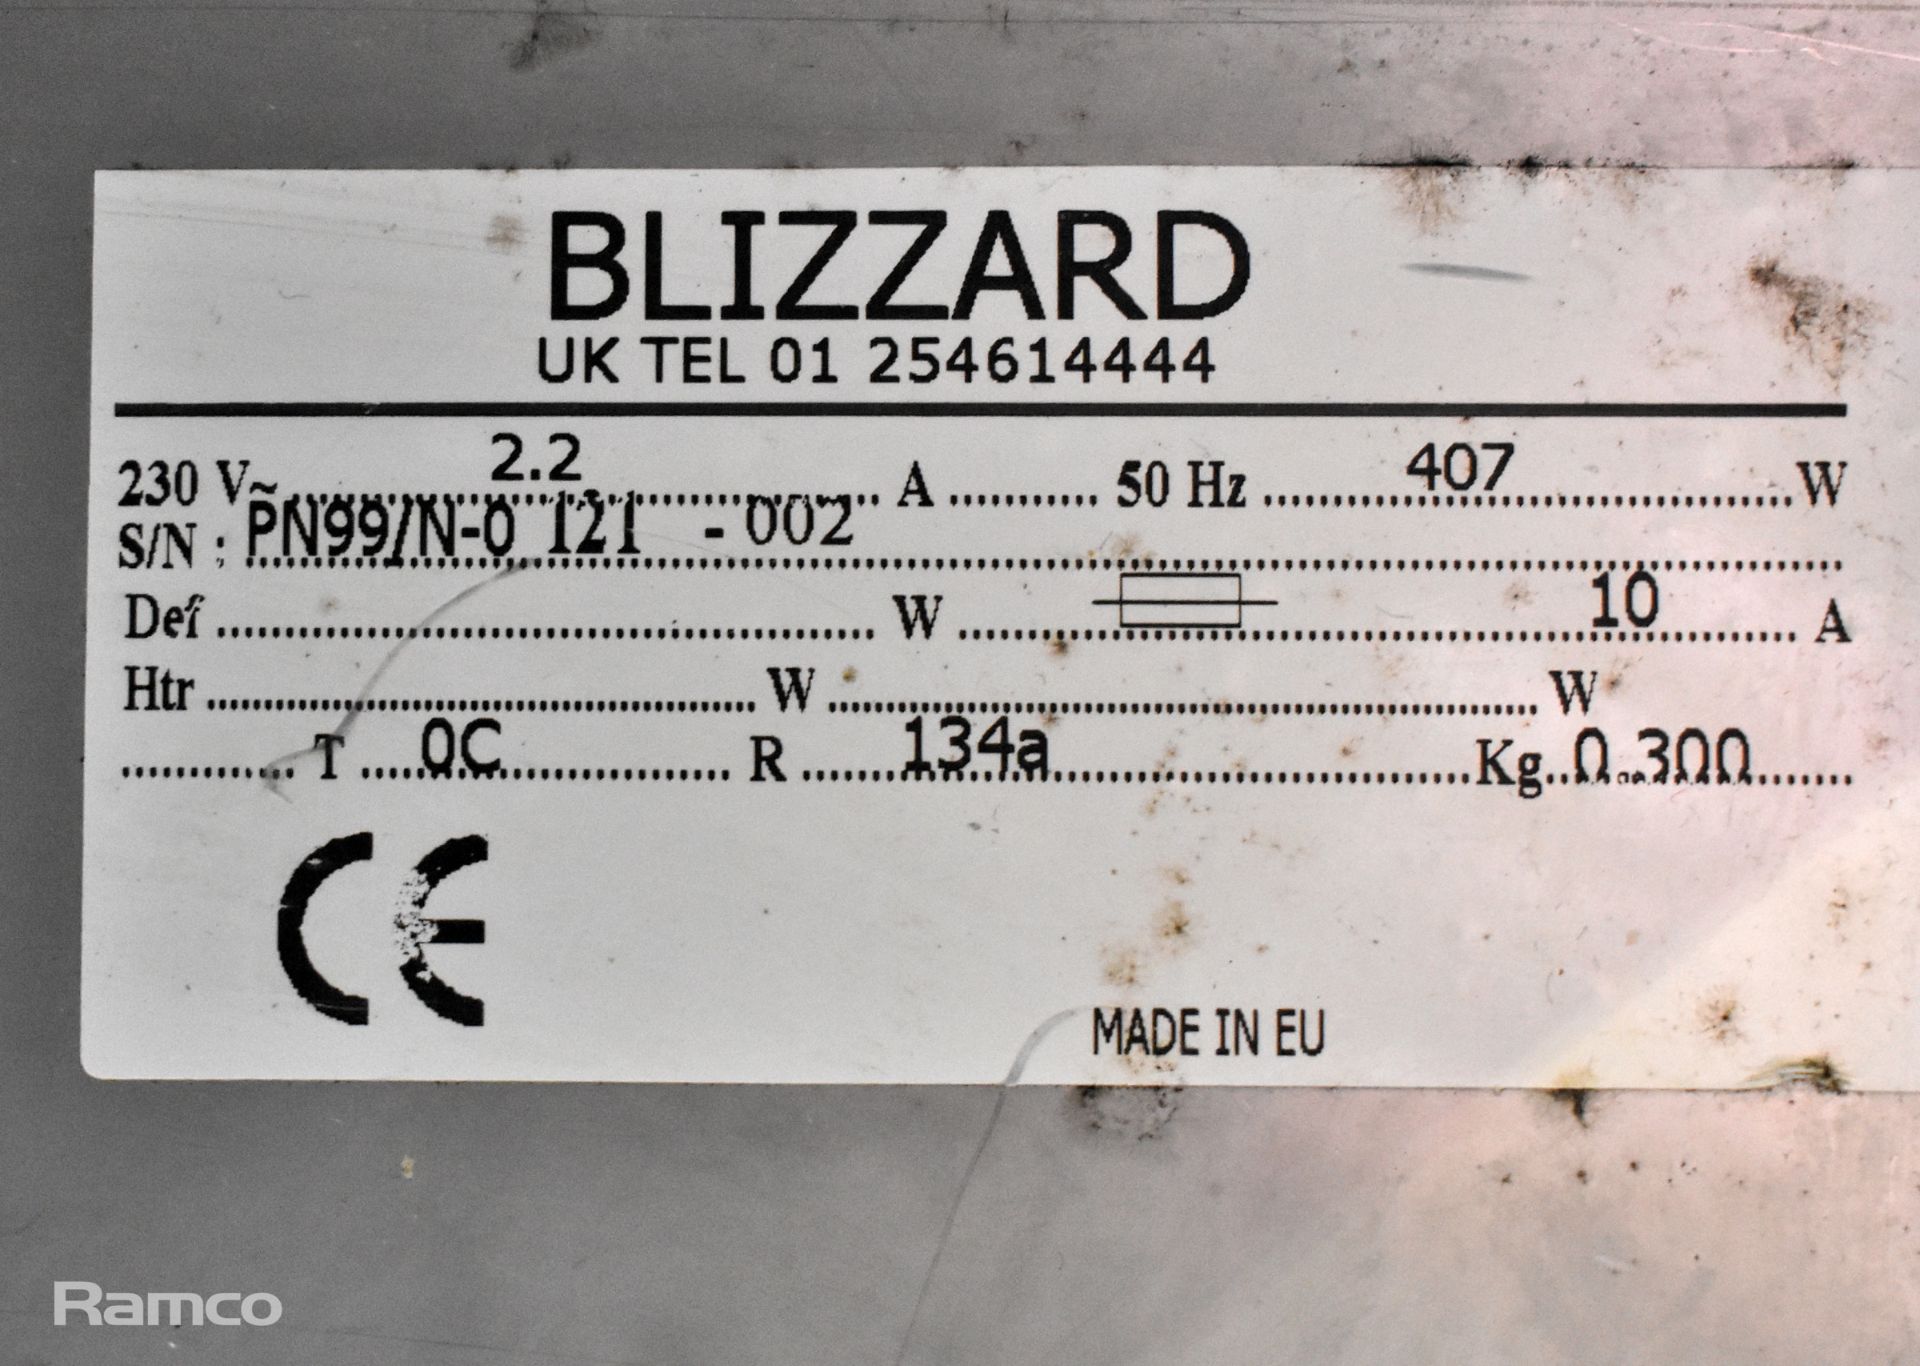 Blizzard stainless steel double door counter fridge - W 1560 x D 700 x H 860mm - Image 5 of 7